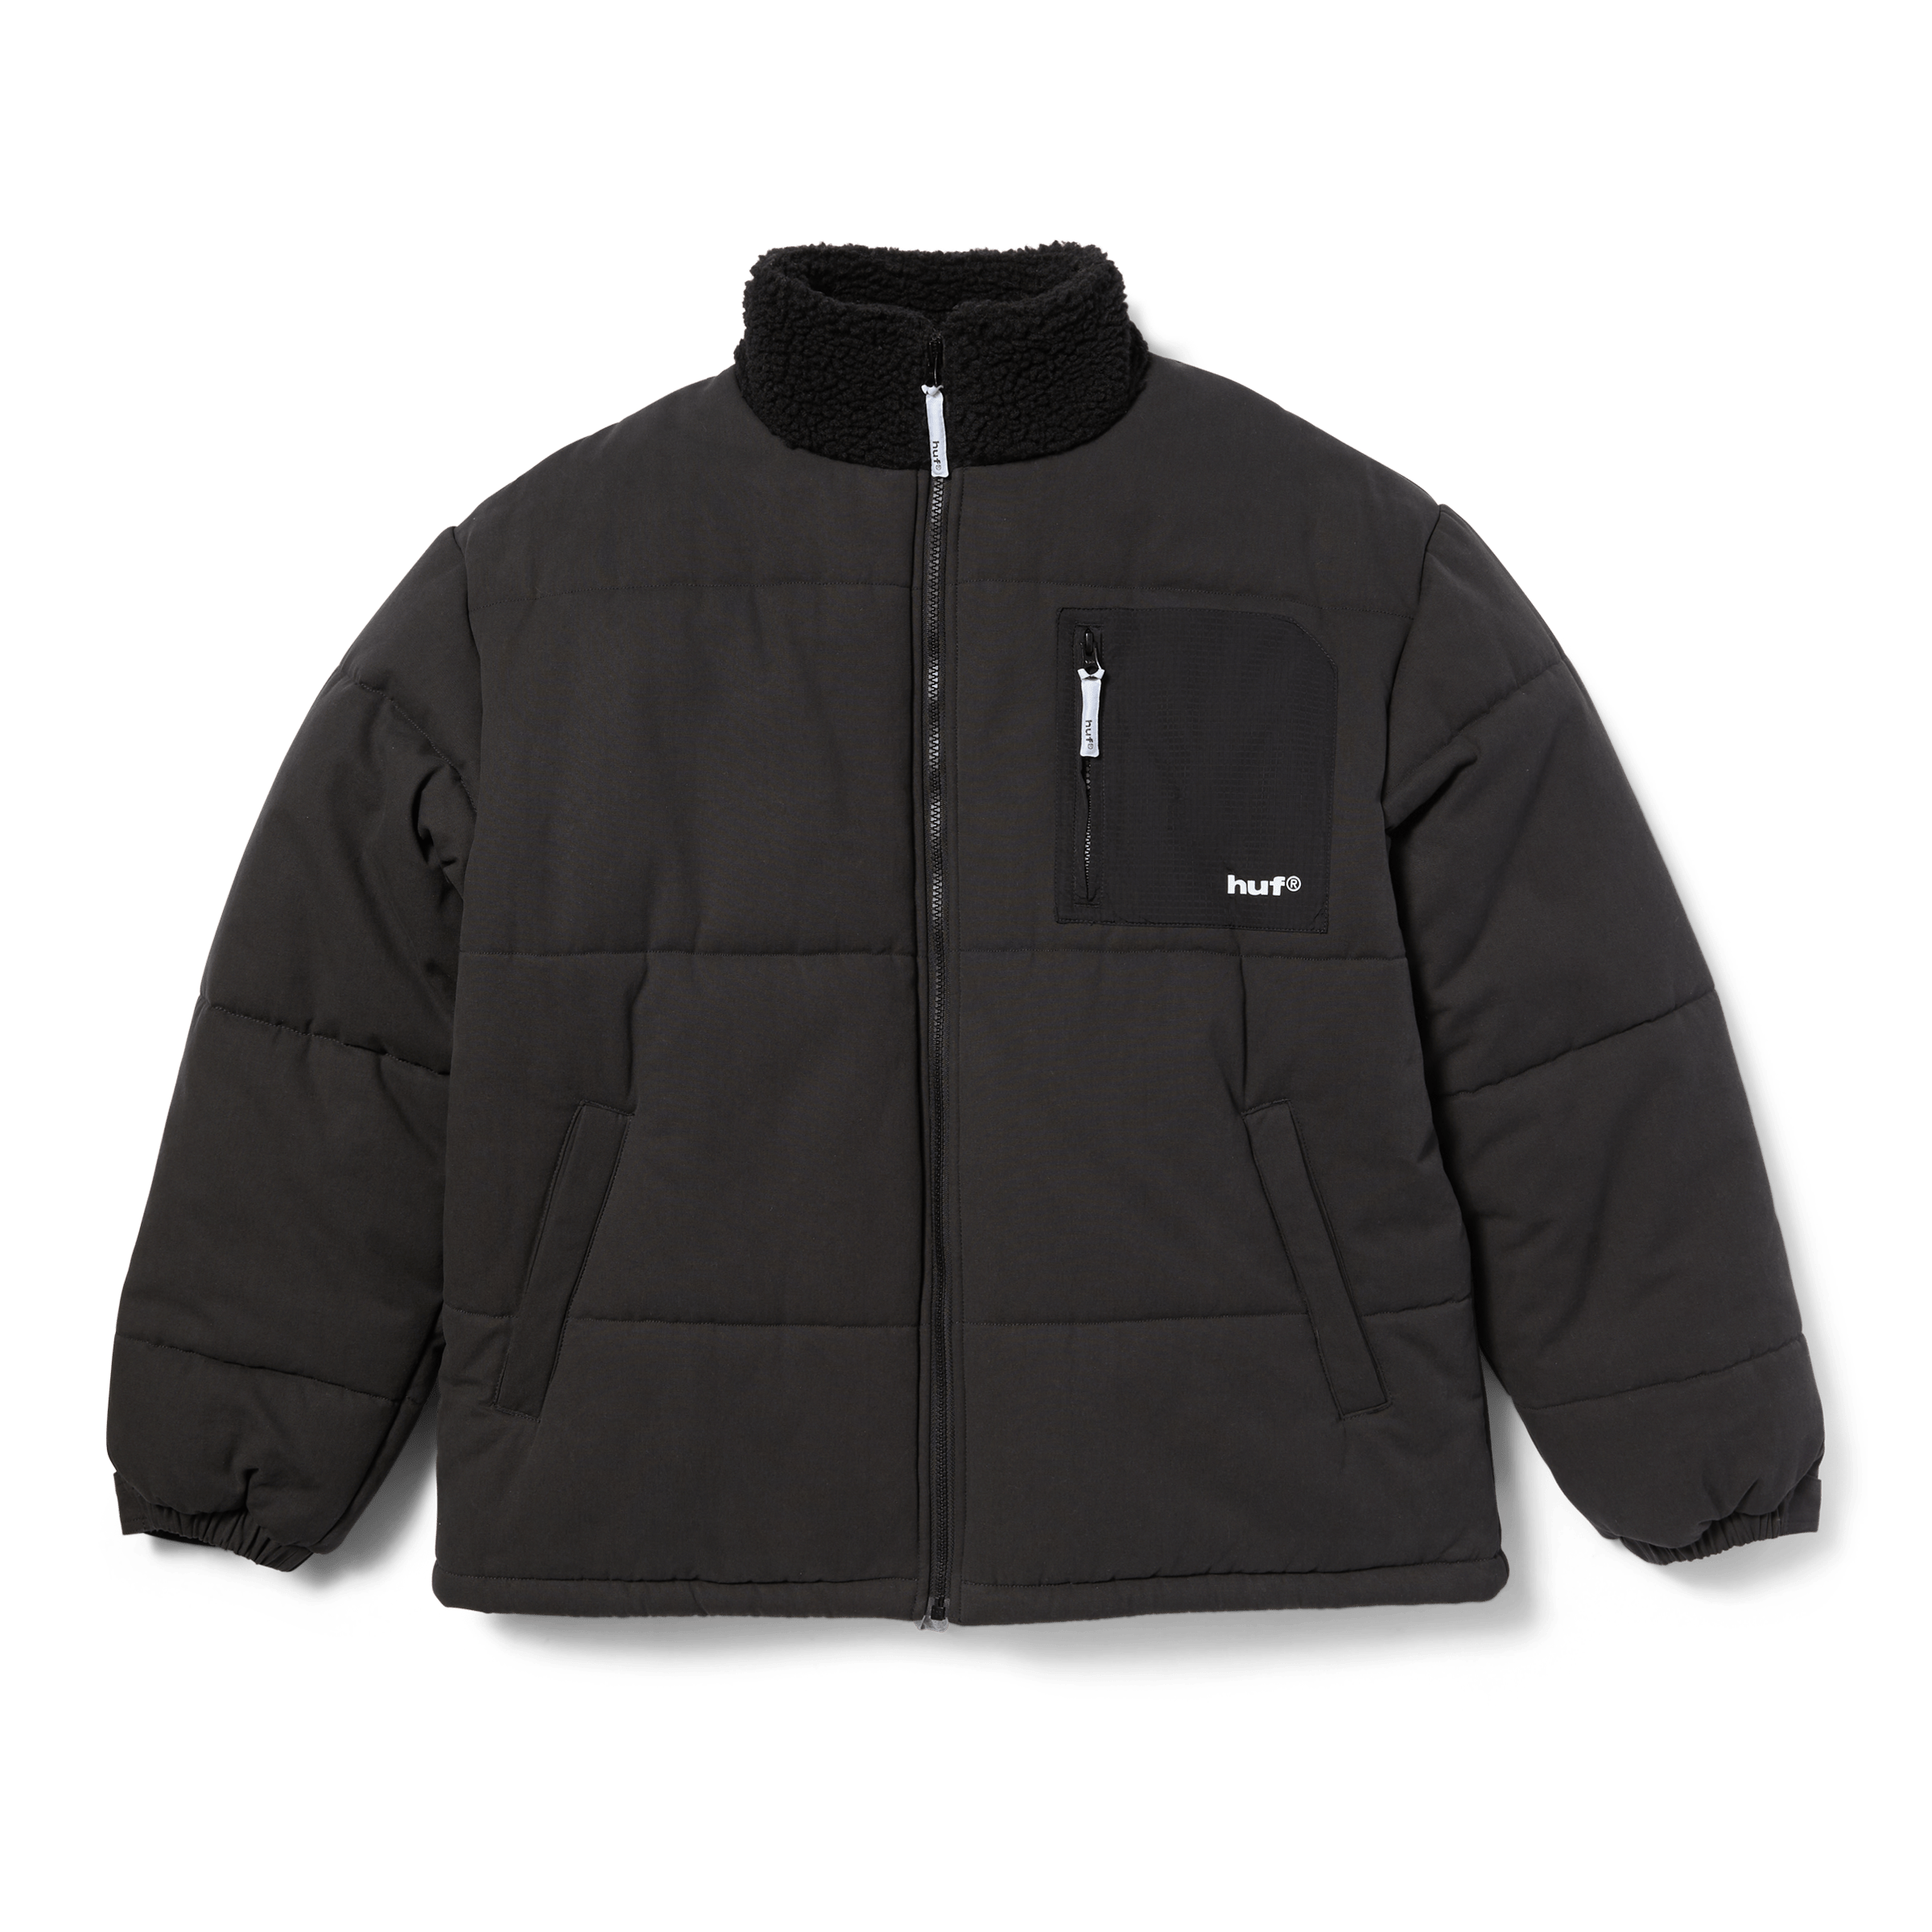 Crop Puffer Jacket in Fuchsia – MOZELLE boutique